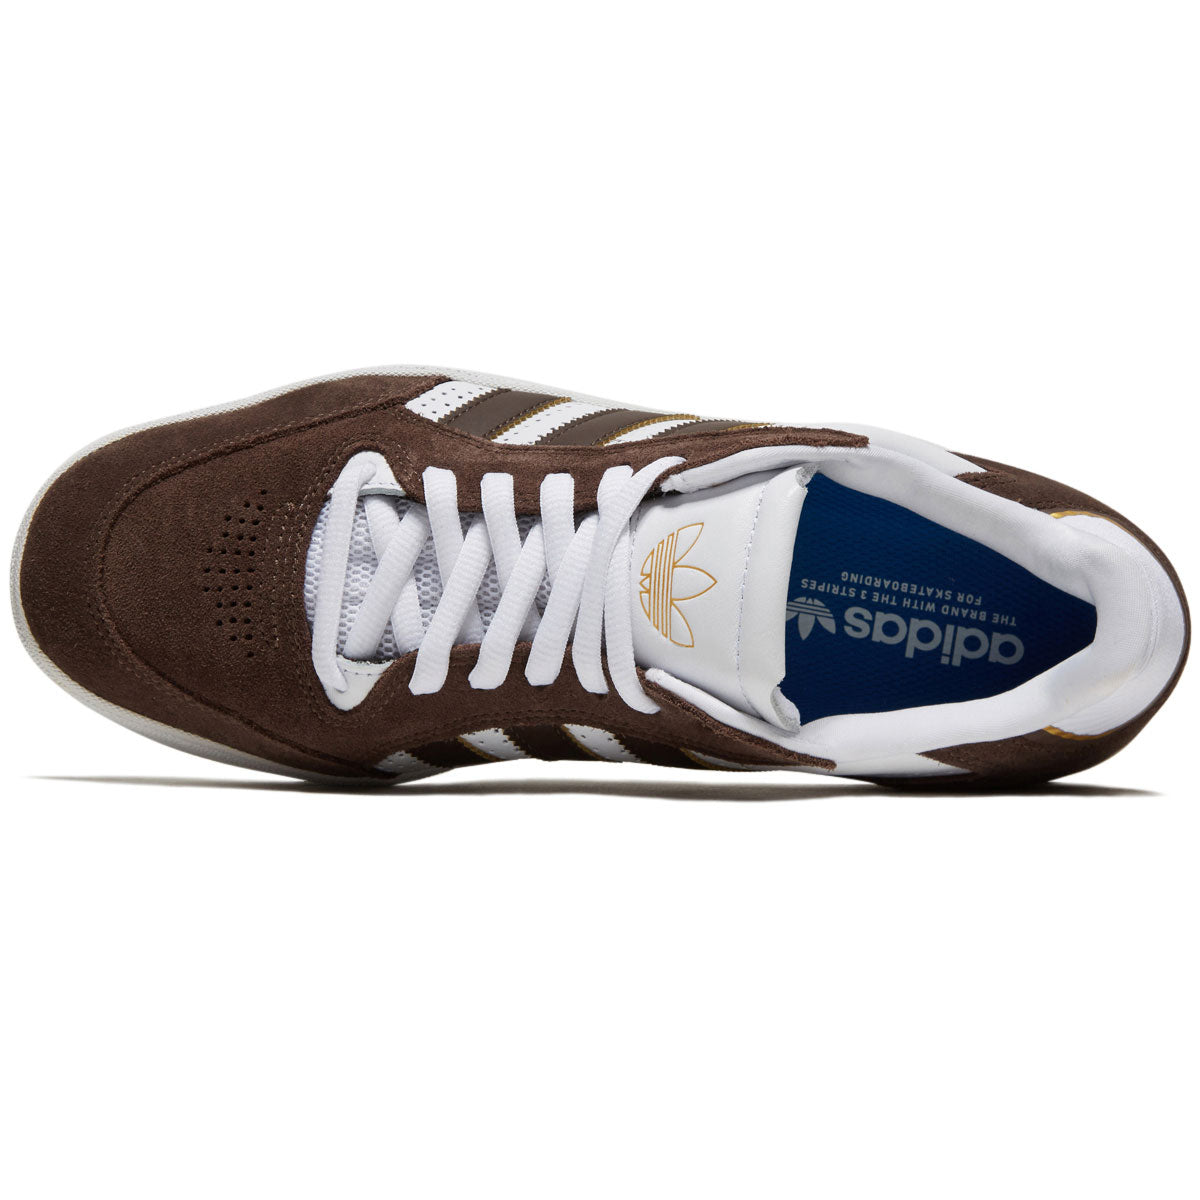 Adidas Tyshawn Low Shoes - Brown/White/Gold Metallic image 3